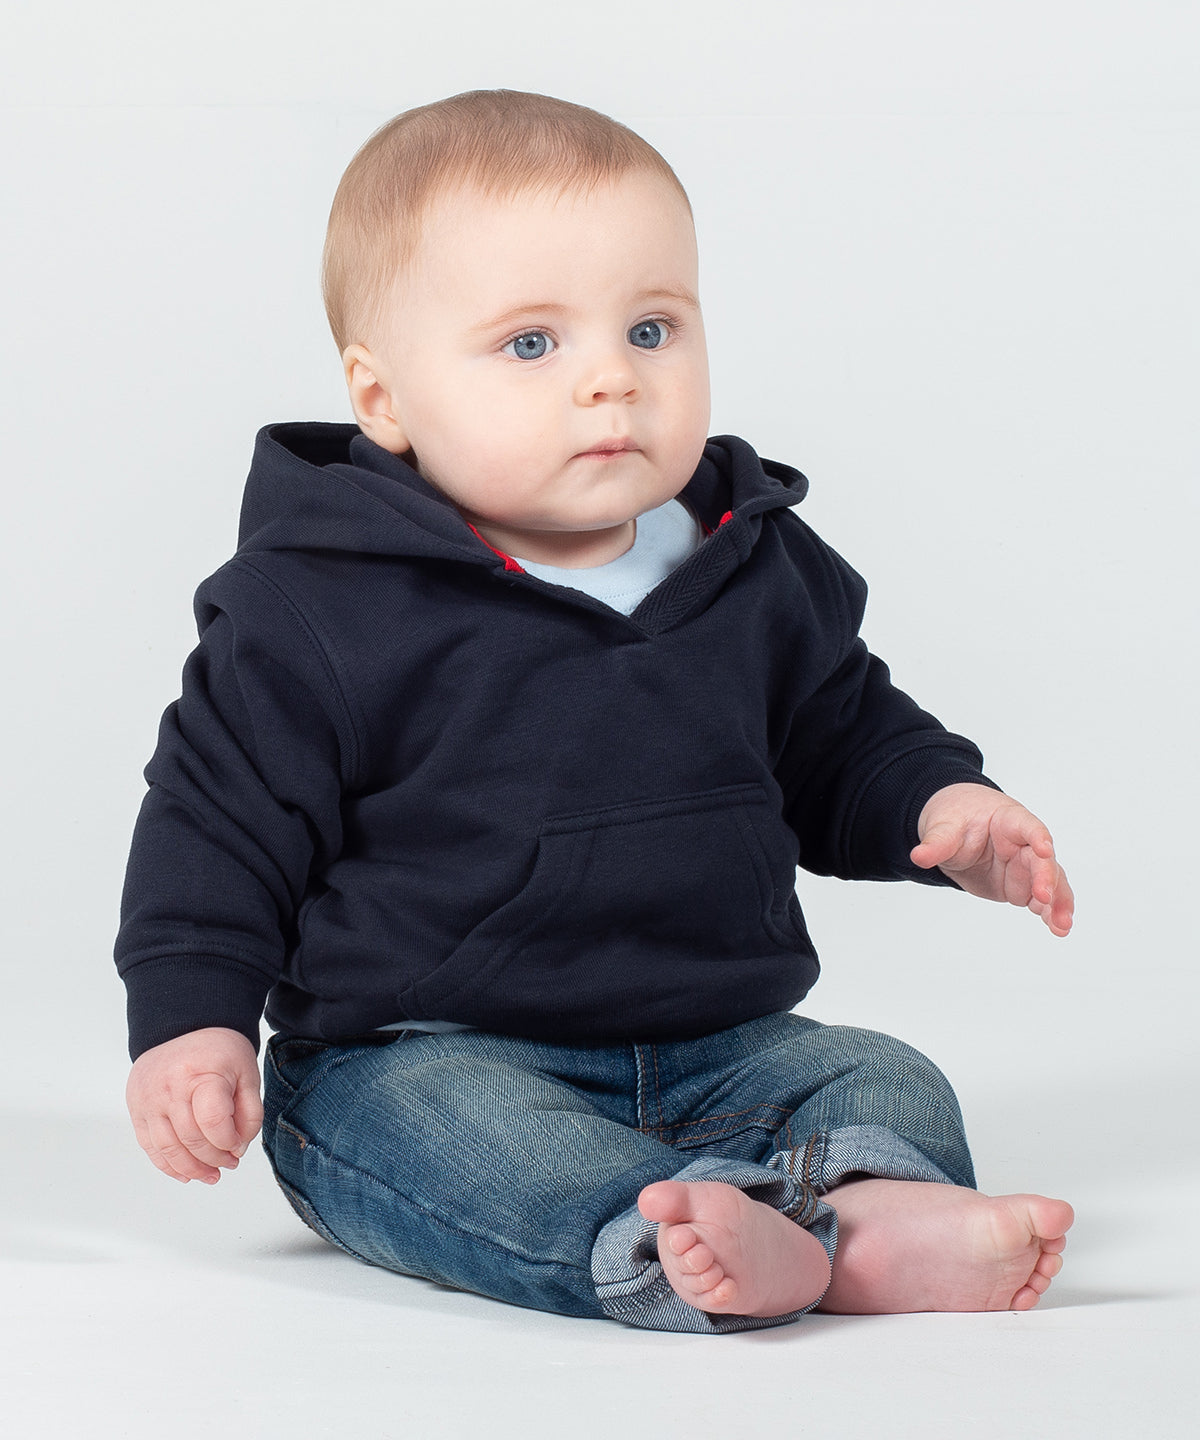 Hettupeysur - Toddler Hooded Sweatshirt With Kangaroo Pocket